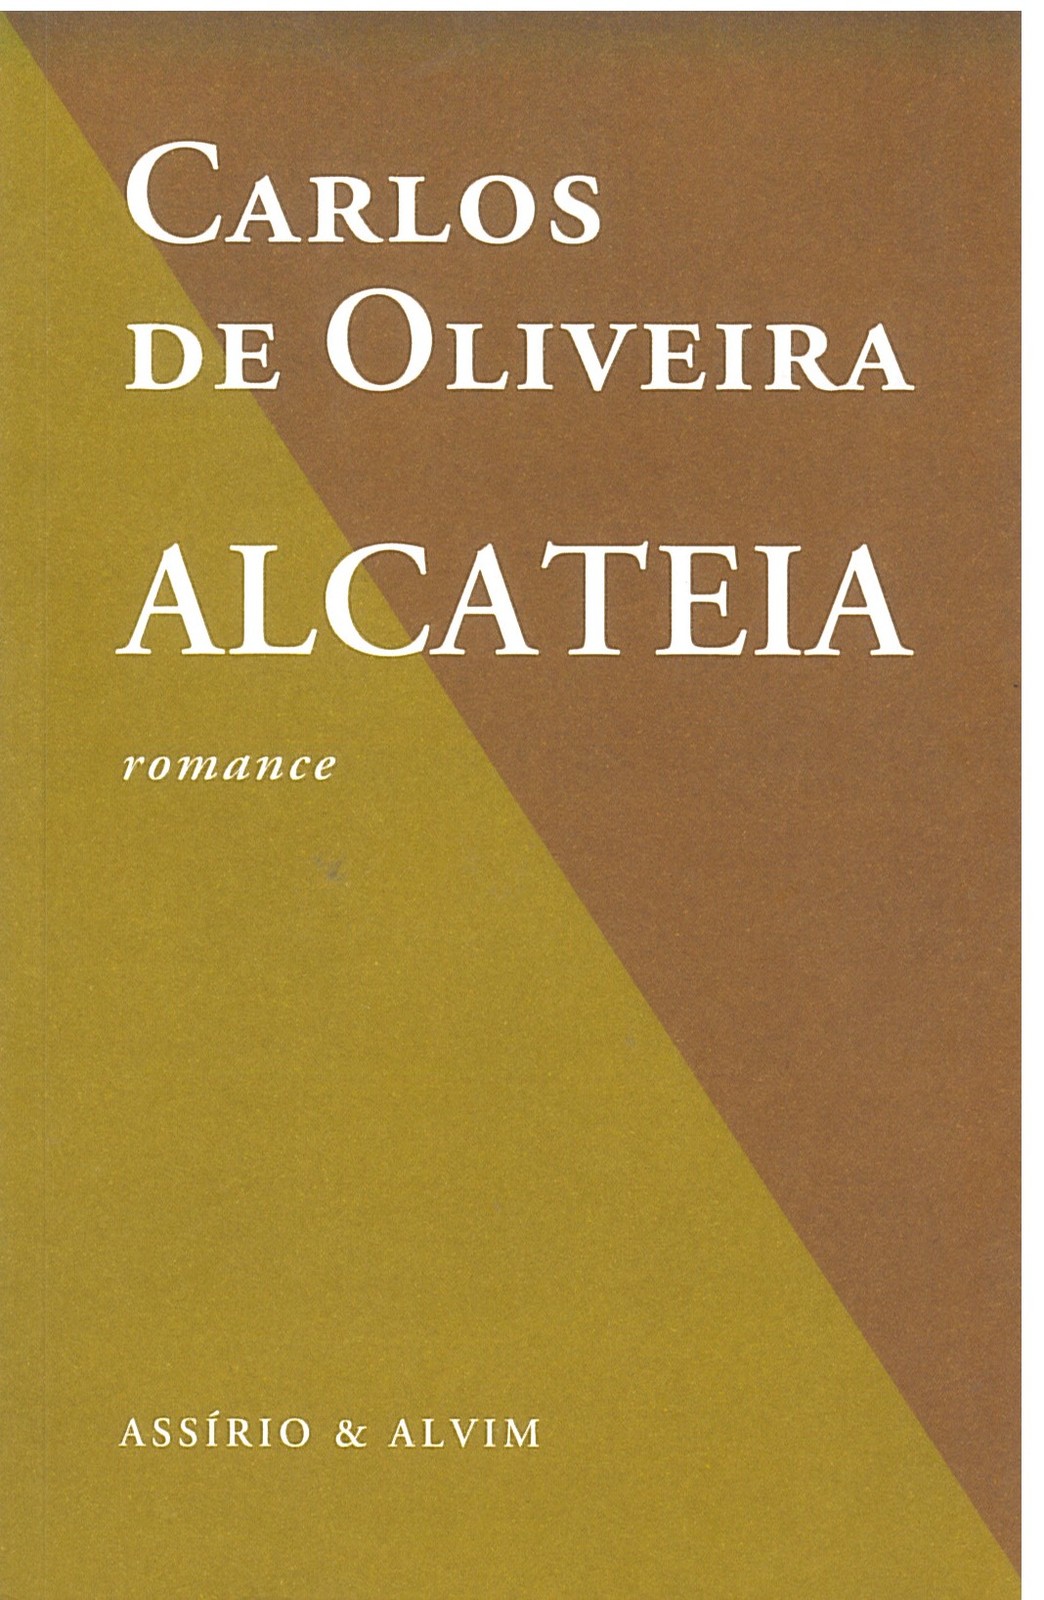 Carlos de Oliveira - Alcateia